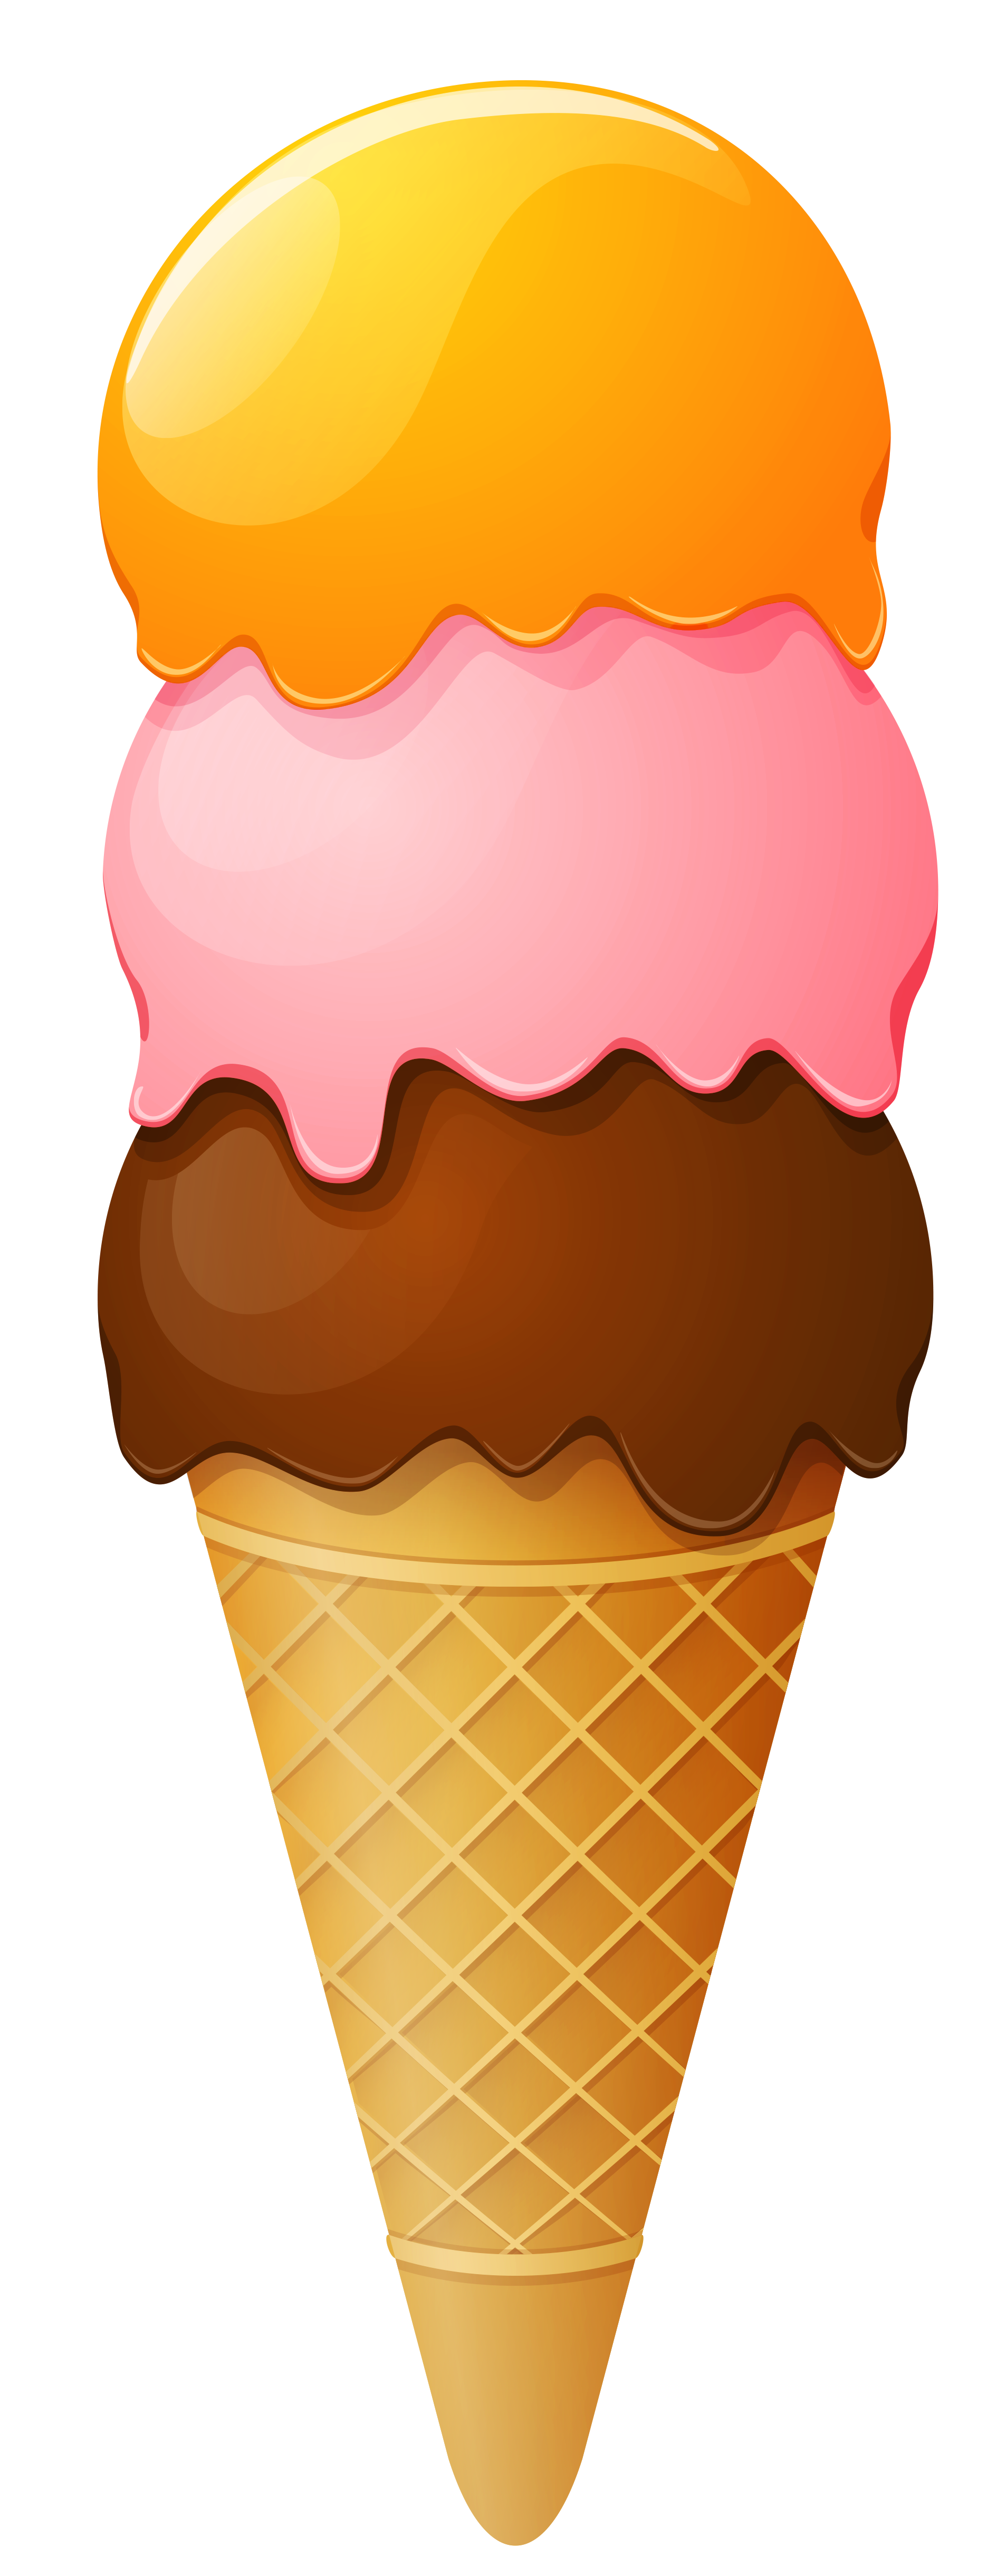 One ice cream cone